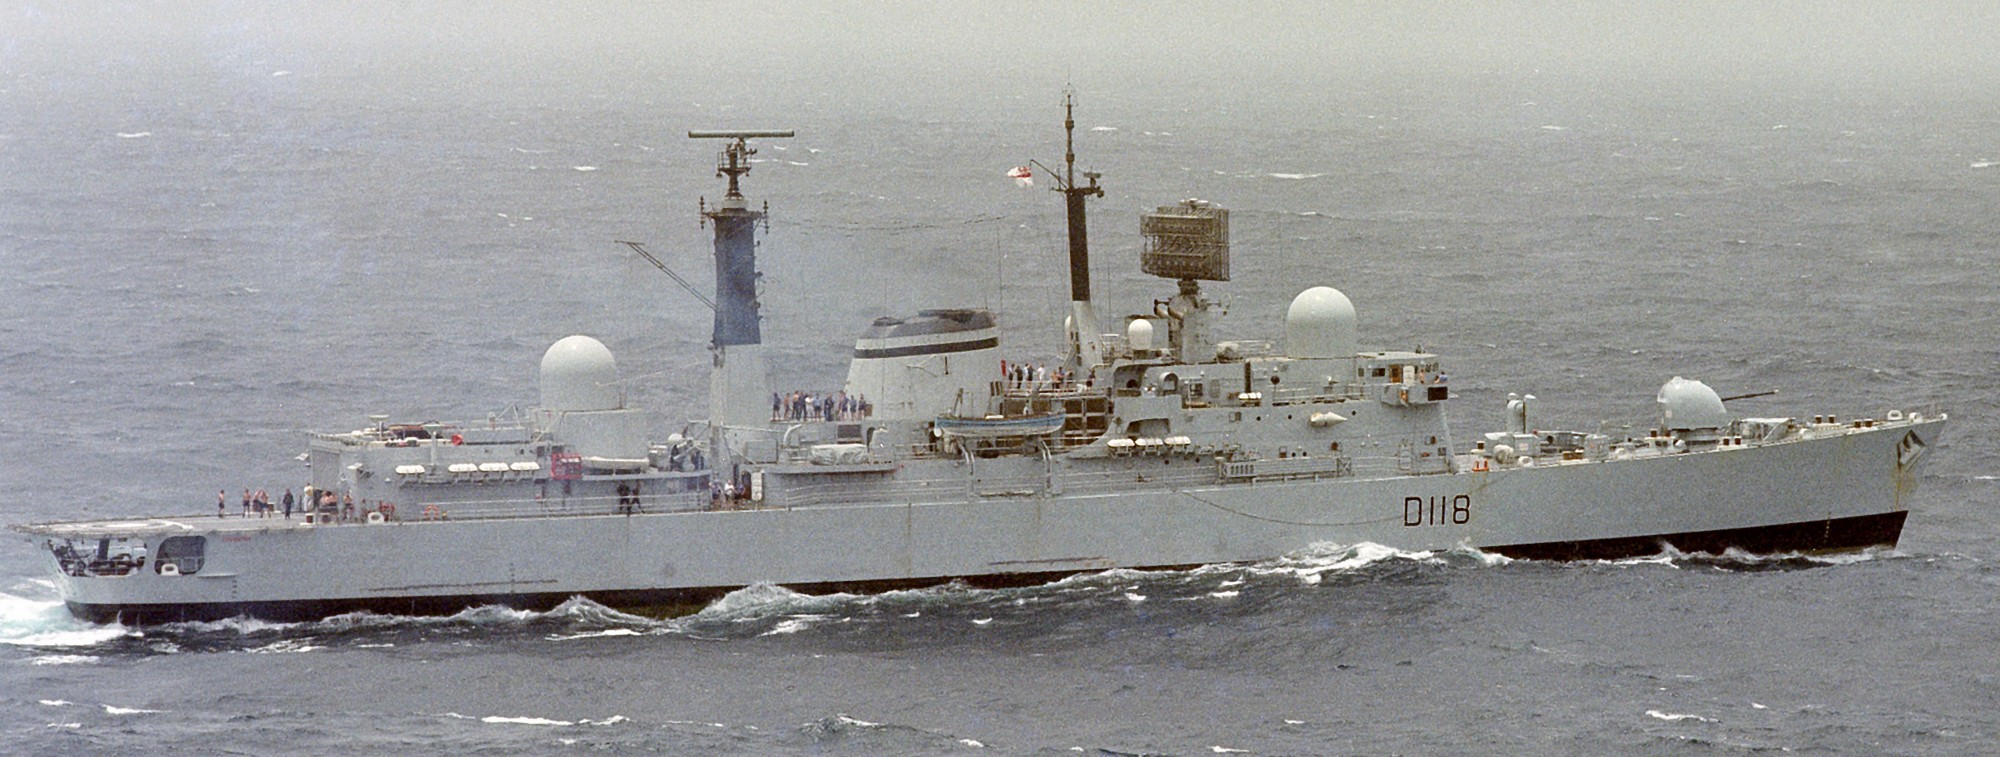 d108 hms coventry destroyer royal navy falkland war sunk